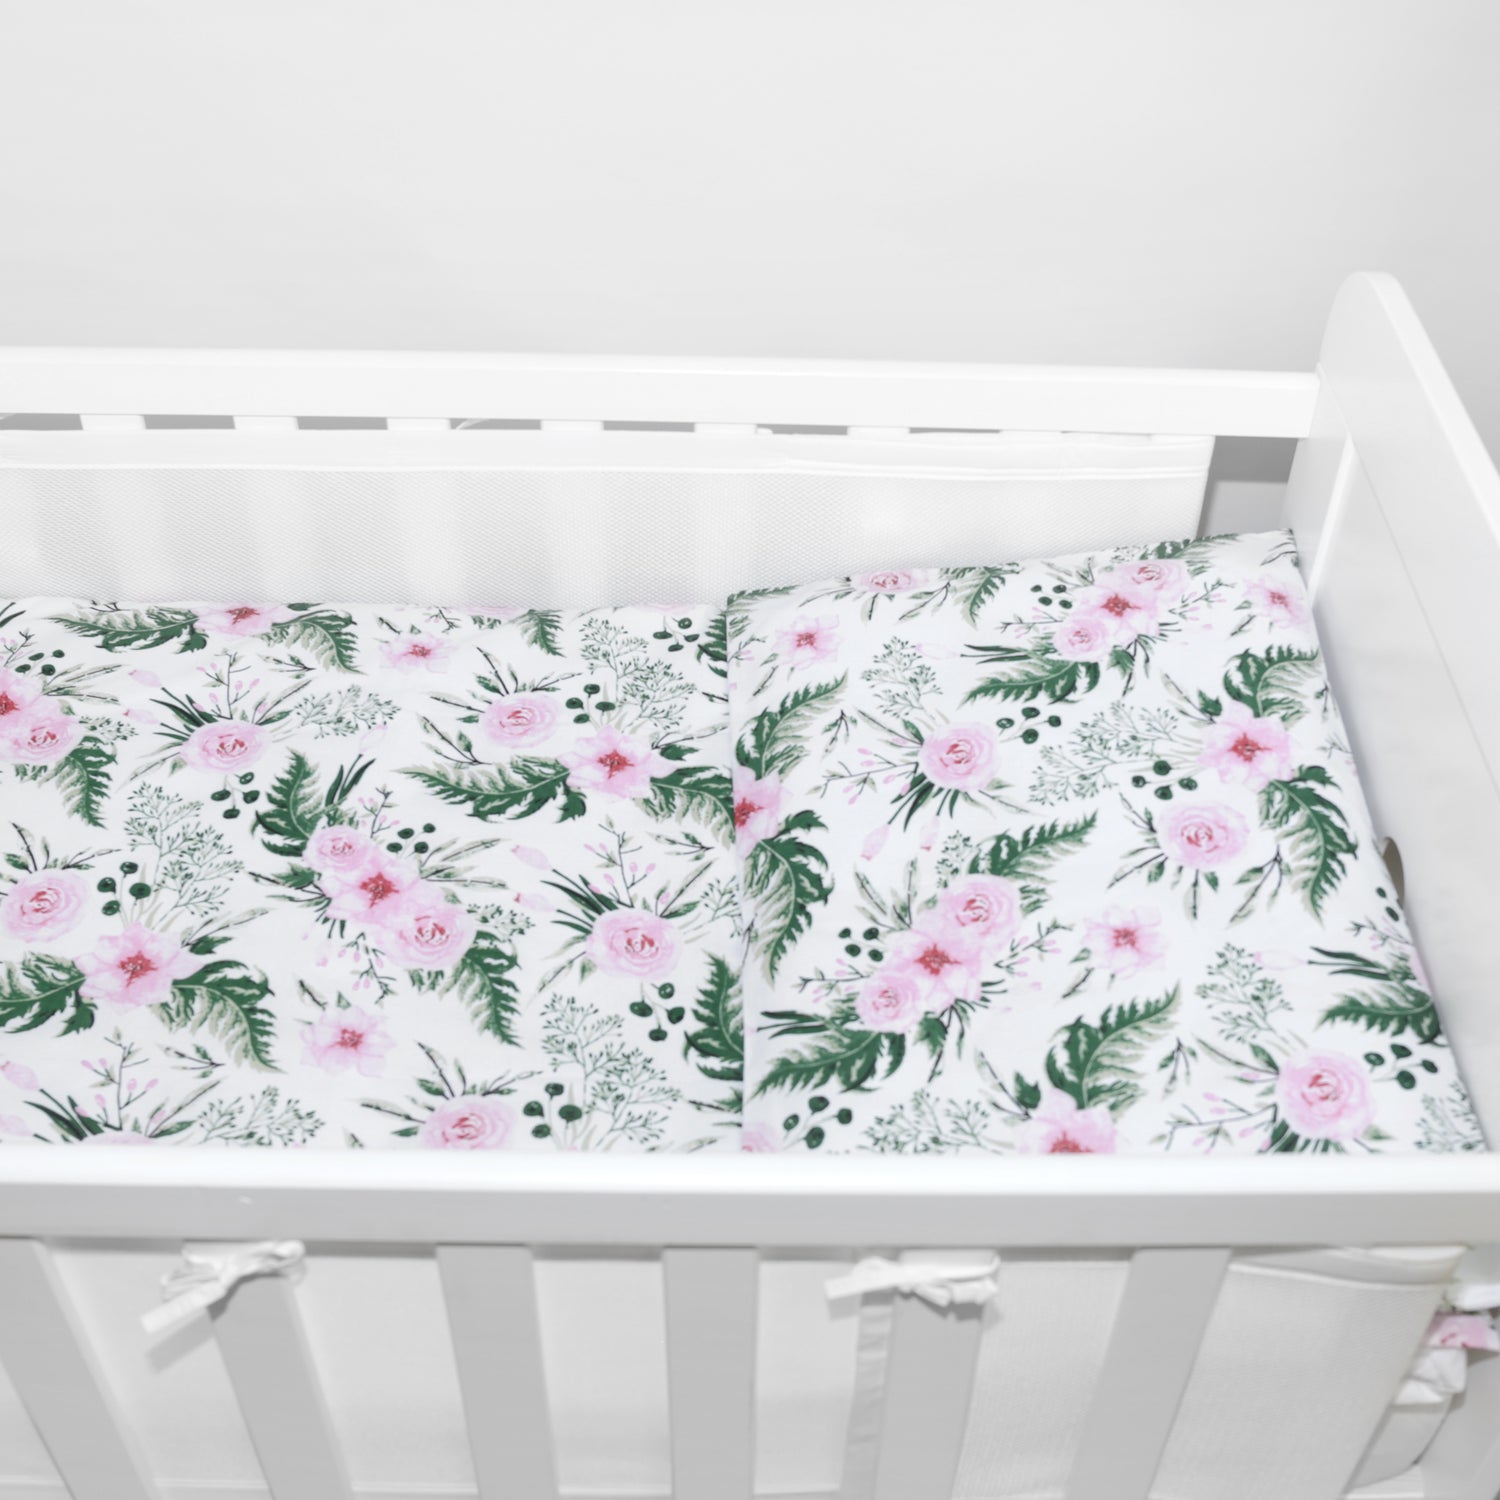 Baby Cot Bedding Set 6Pc Fit Cot bed 140x70cm Garden Flowers